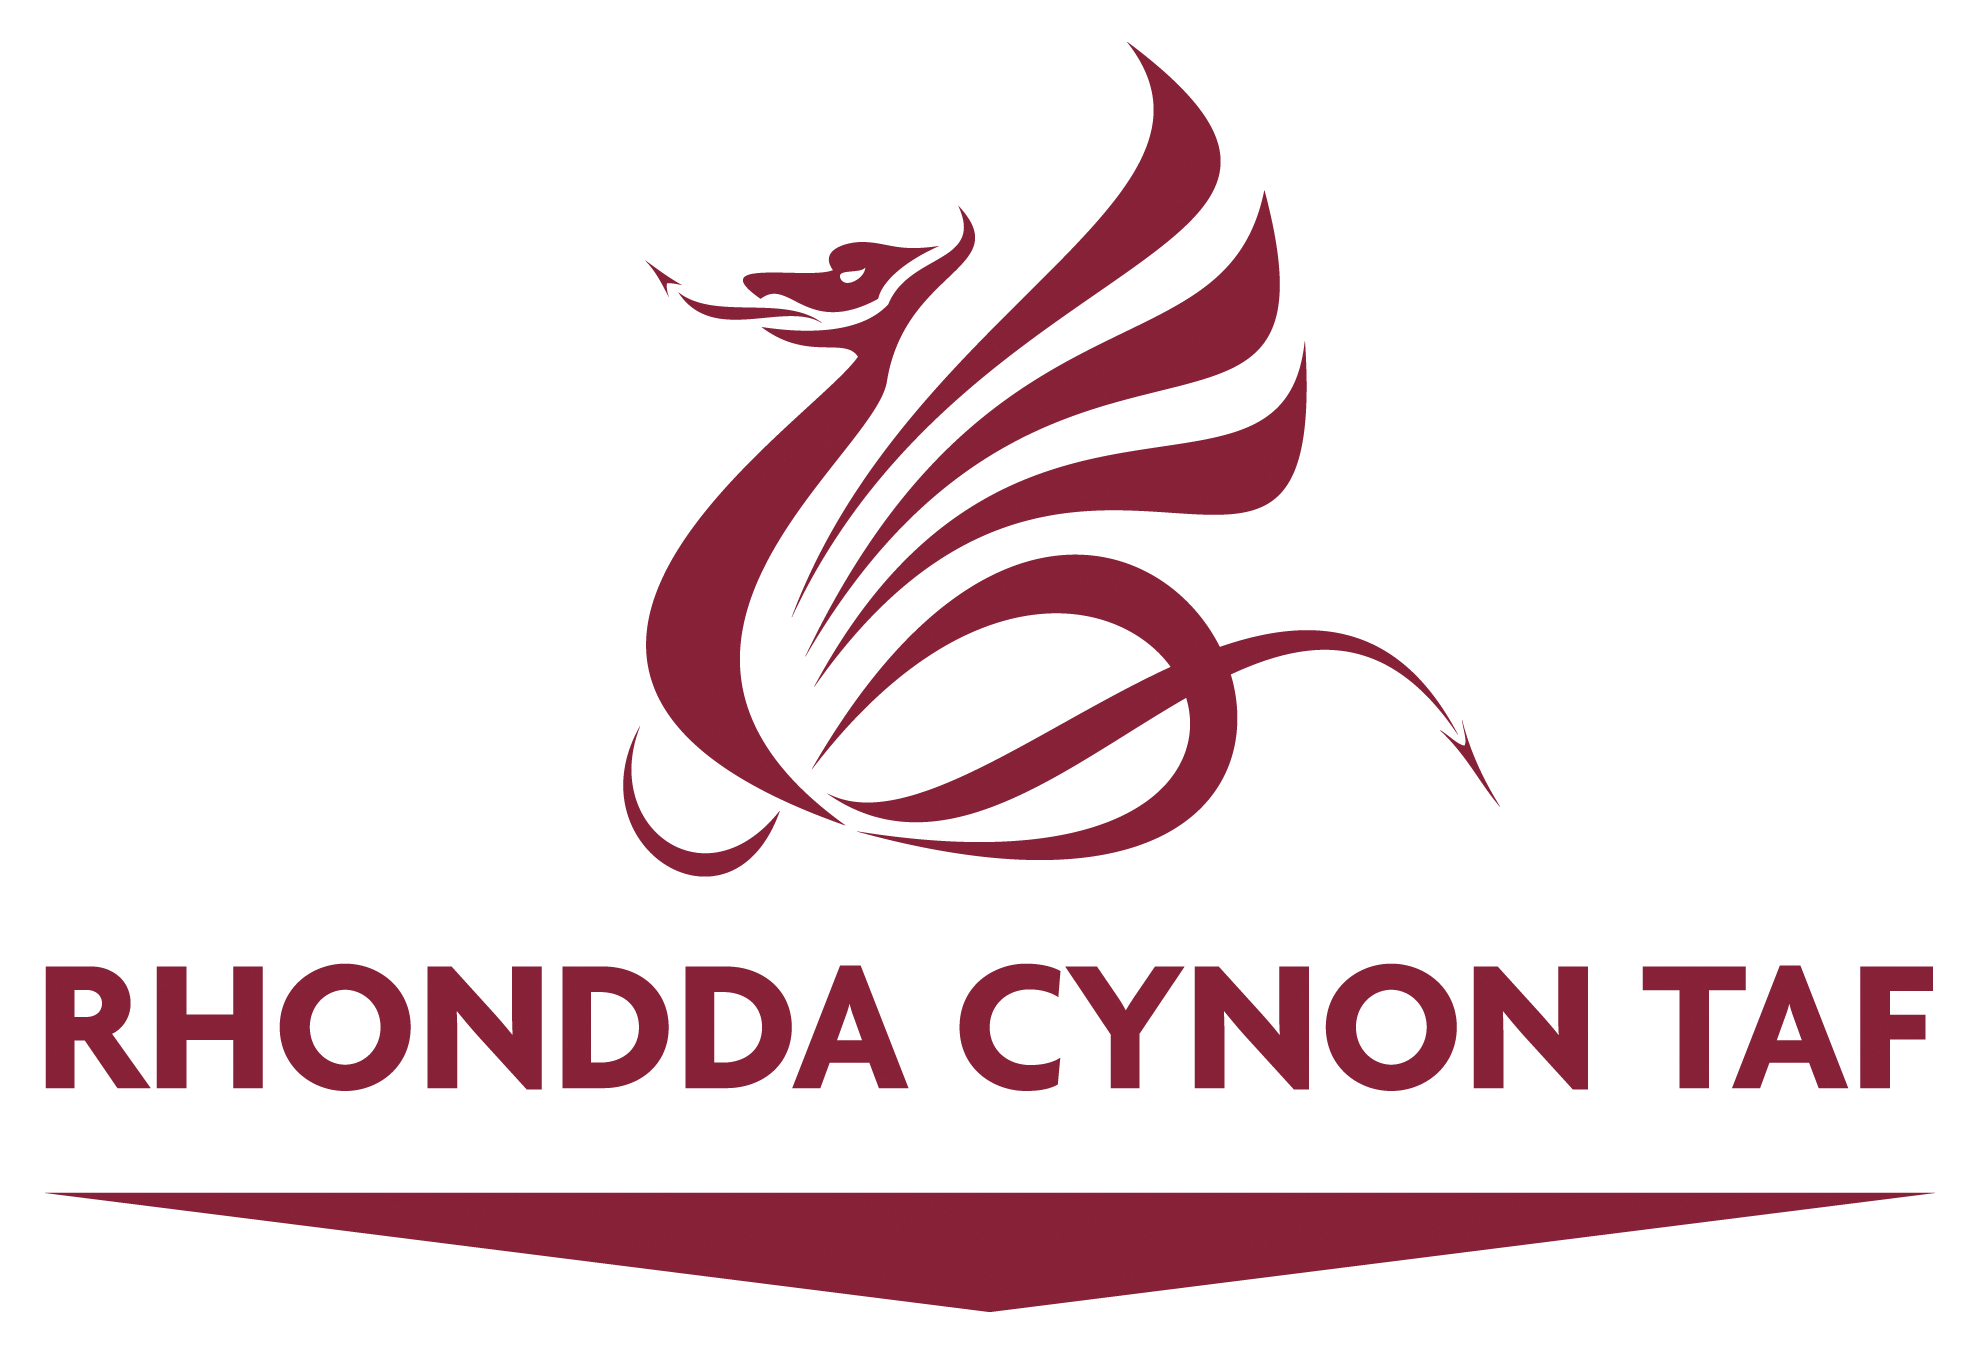 Rhondda Cynon Taf logo